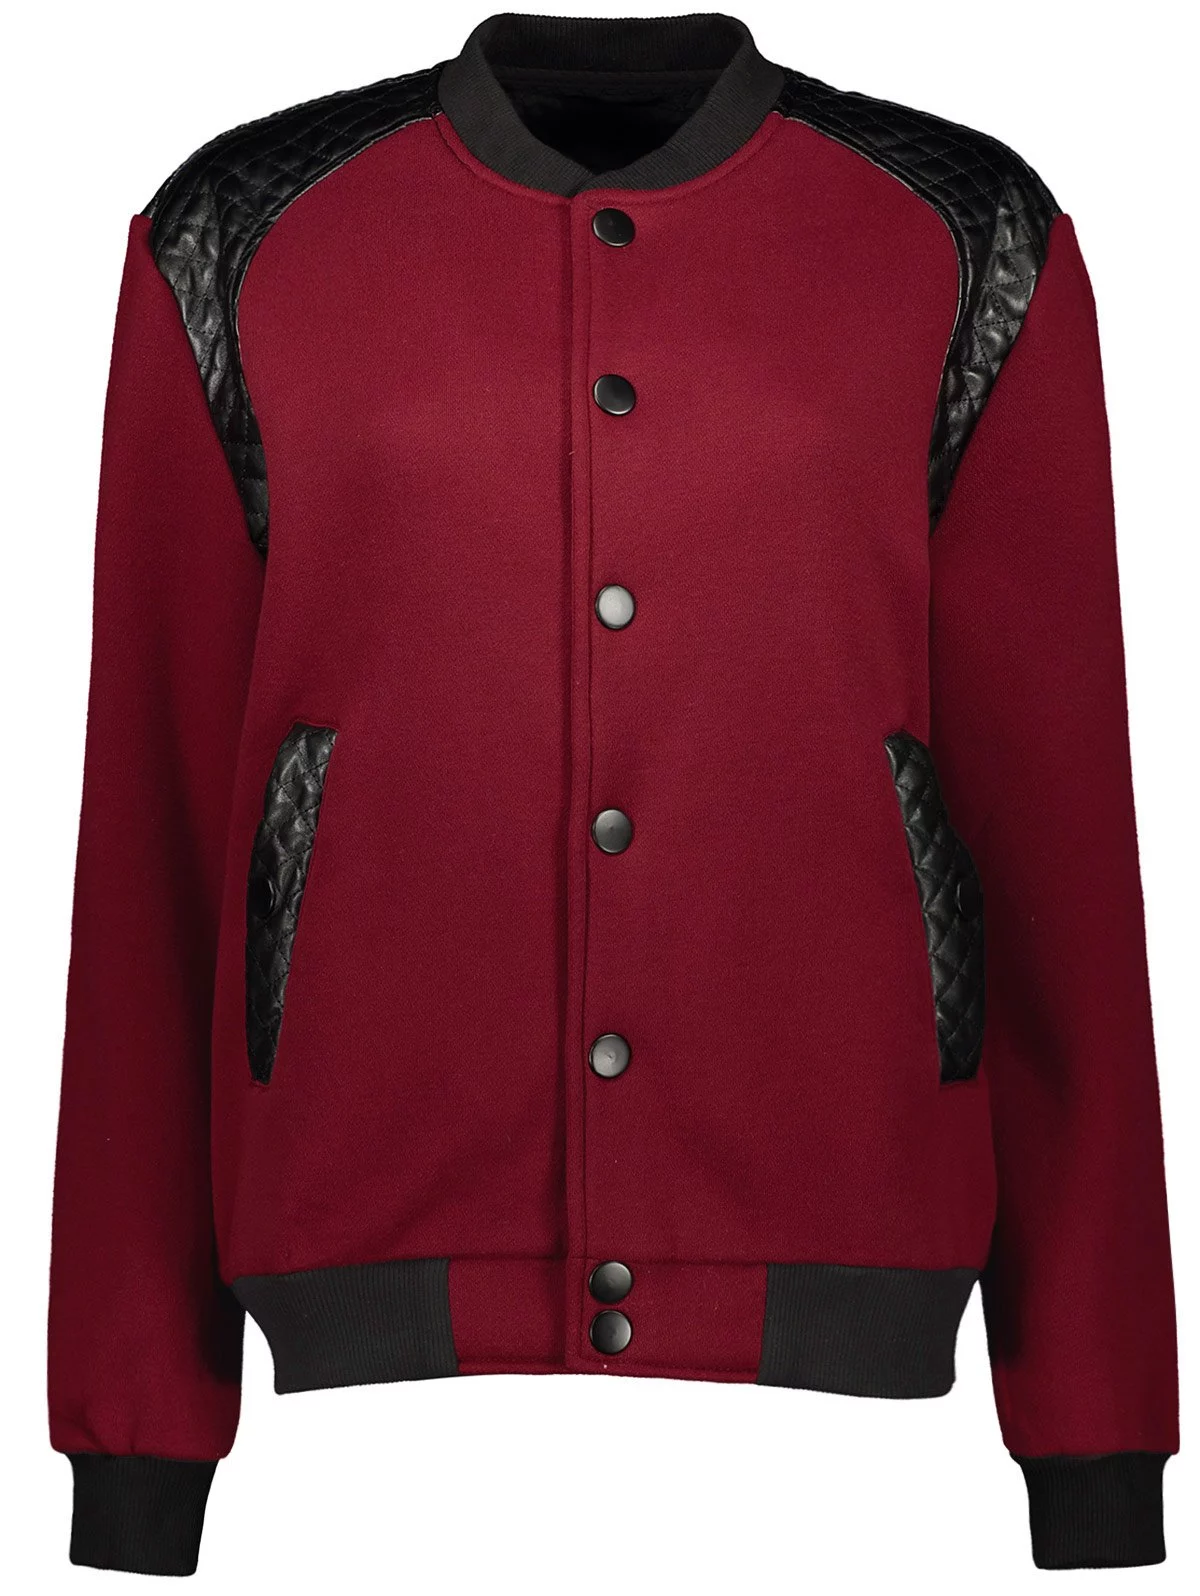 PU-Leather Splicing Design Stand Collar Jacket Claret